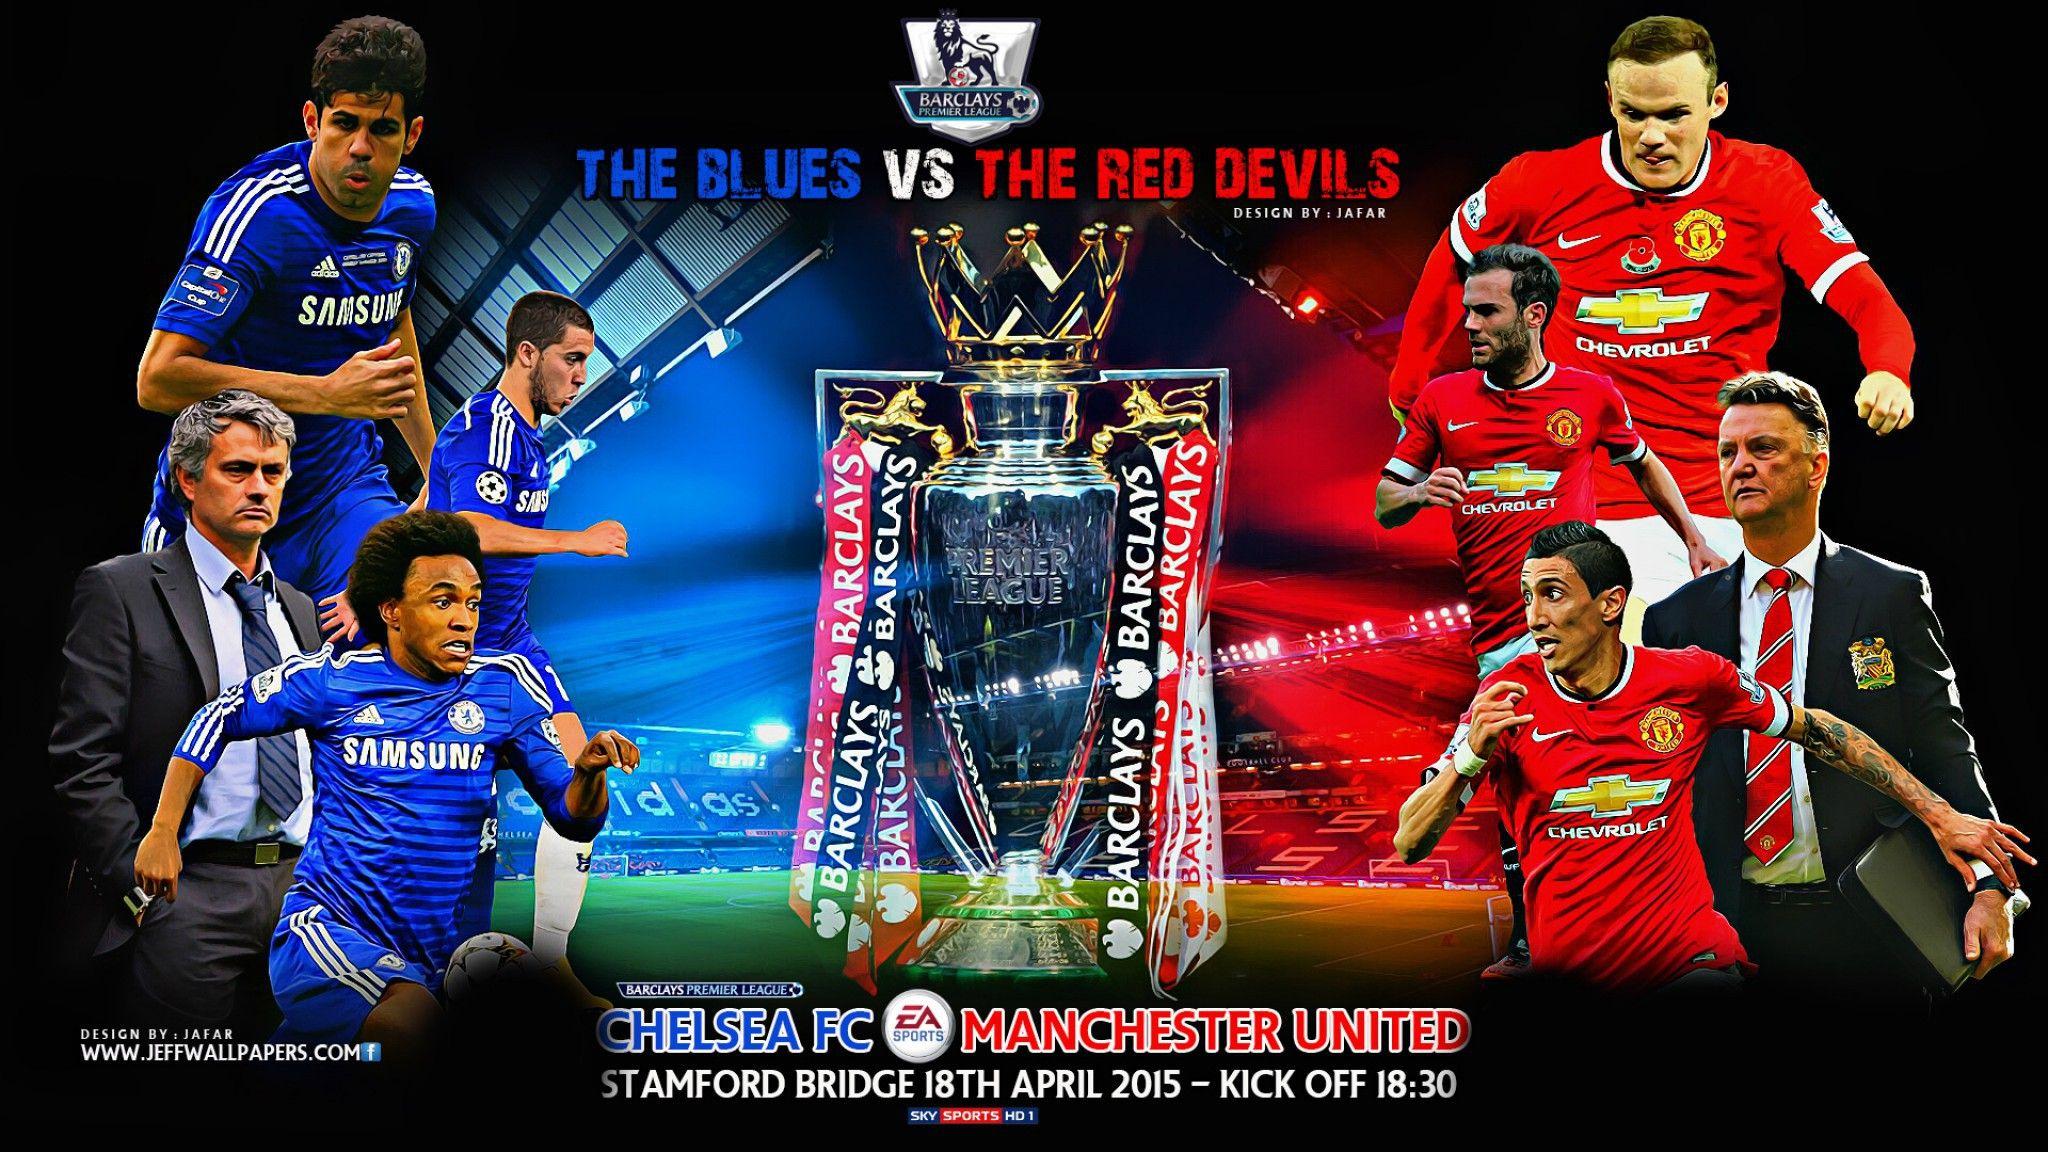 Download 2048x1152 Chelsea FC vs Manchester United 18th April 2015